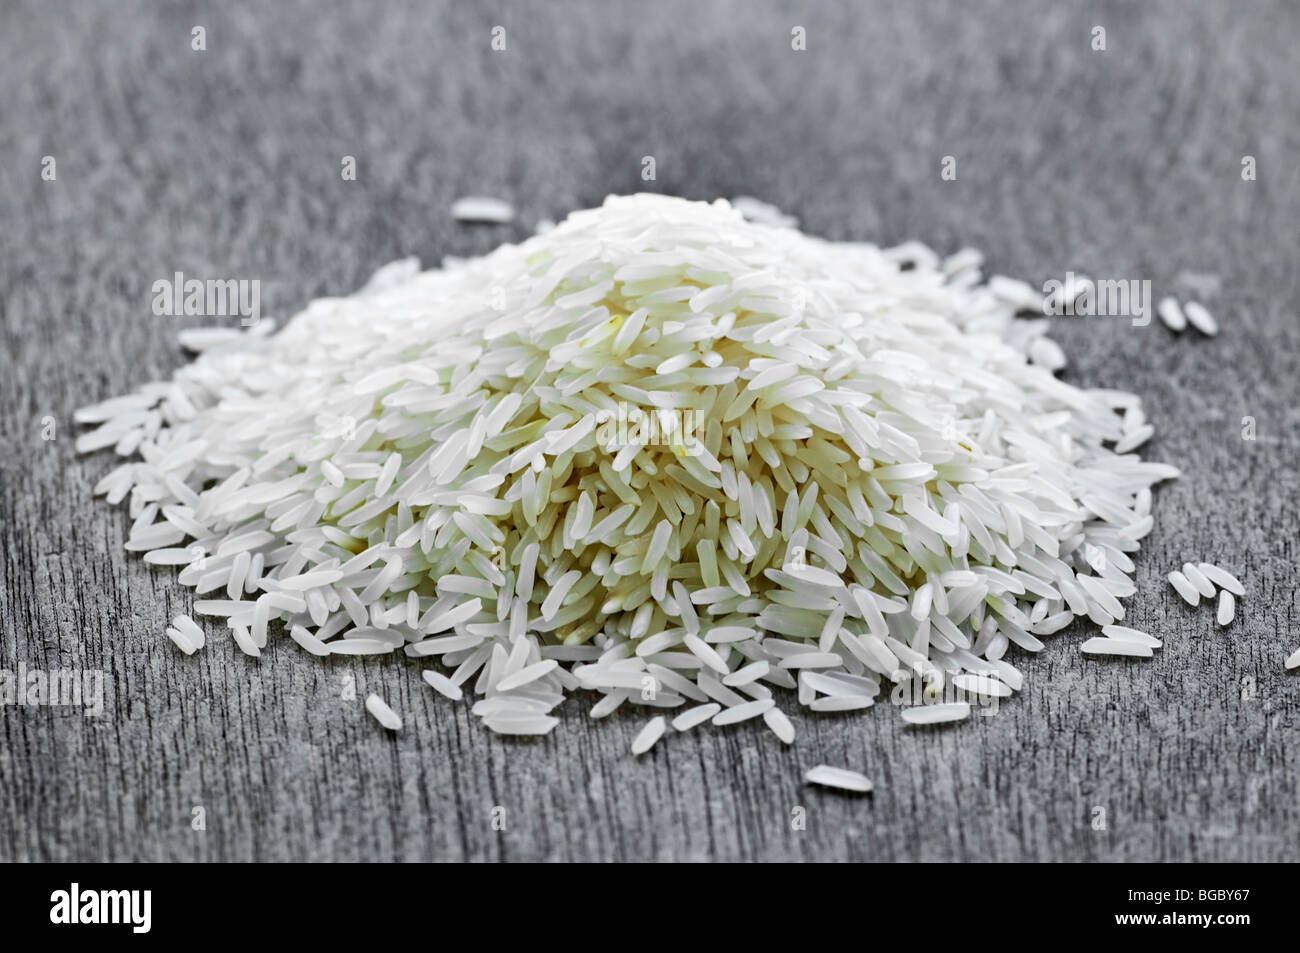 Pile of raw long grain white rice grains Stock Photo